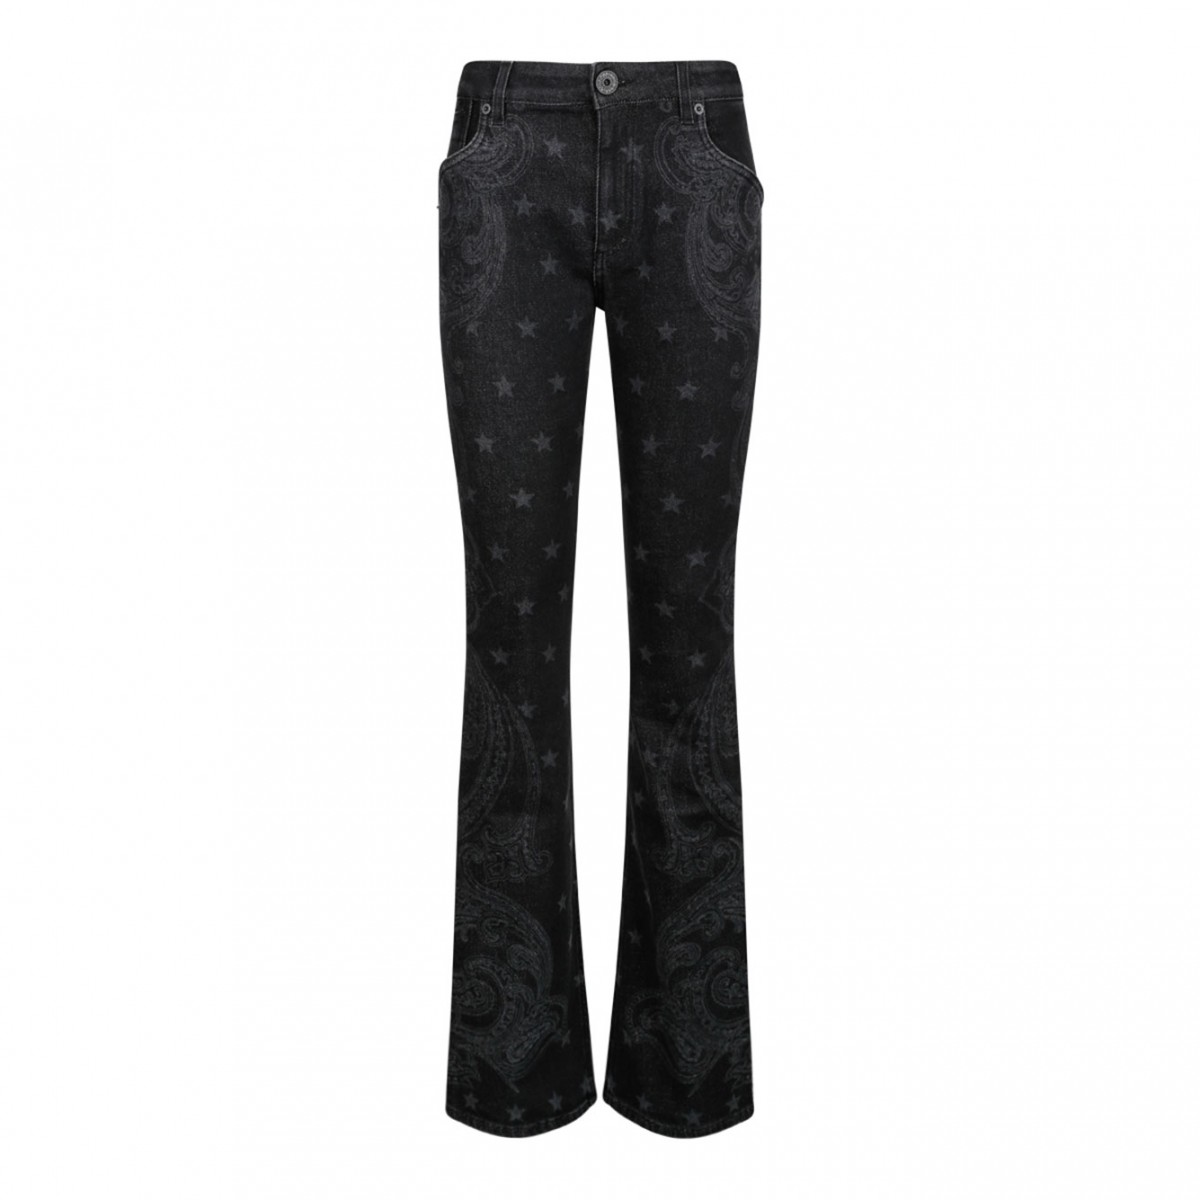 Black Star and Paisley Print Denim Jeans